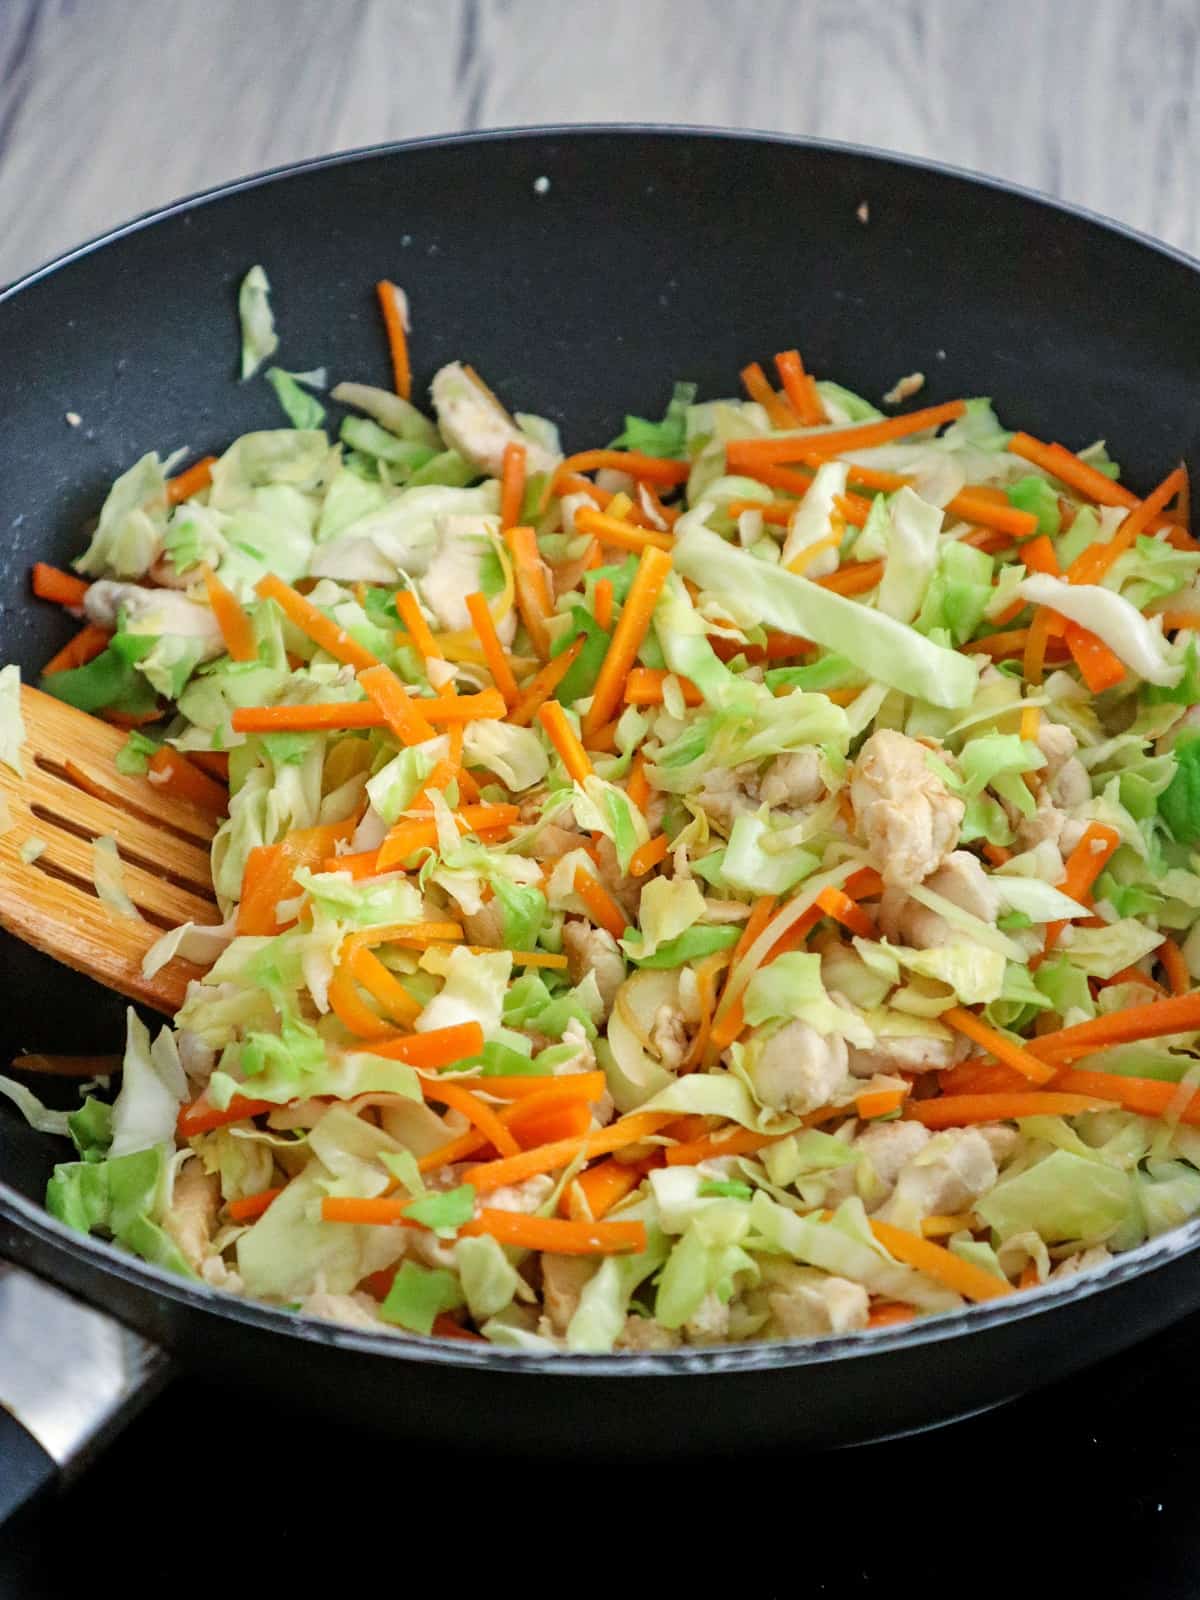 stir-frying vegetables in a wok